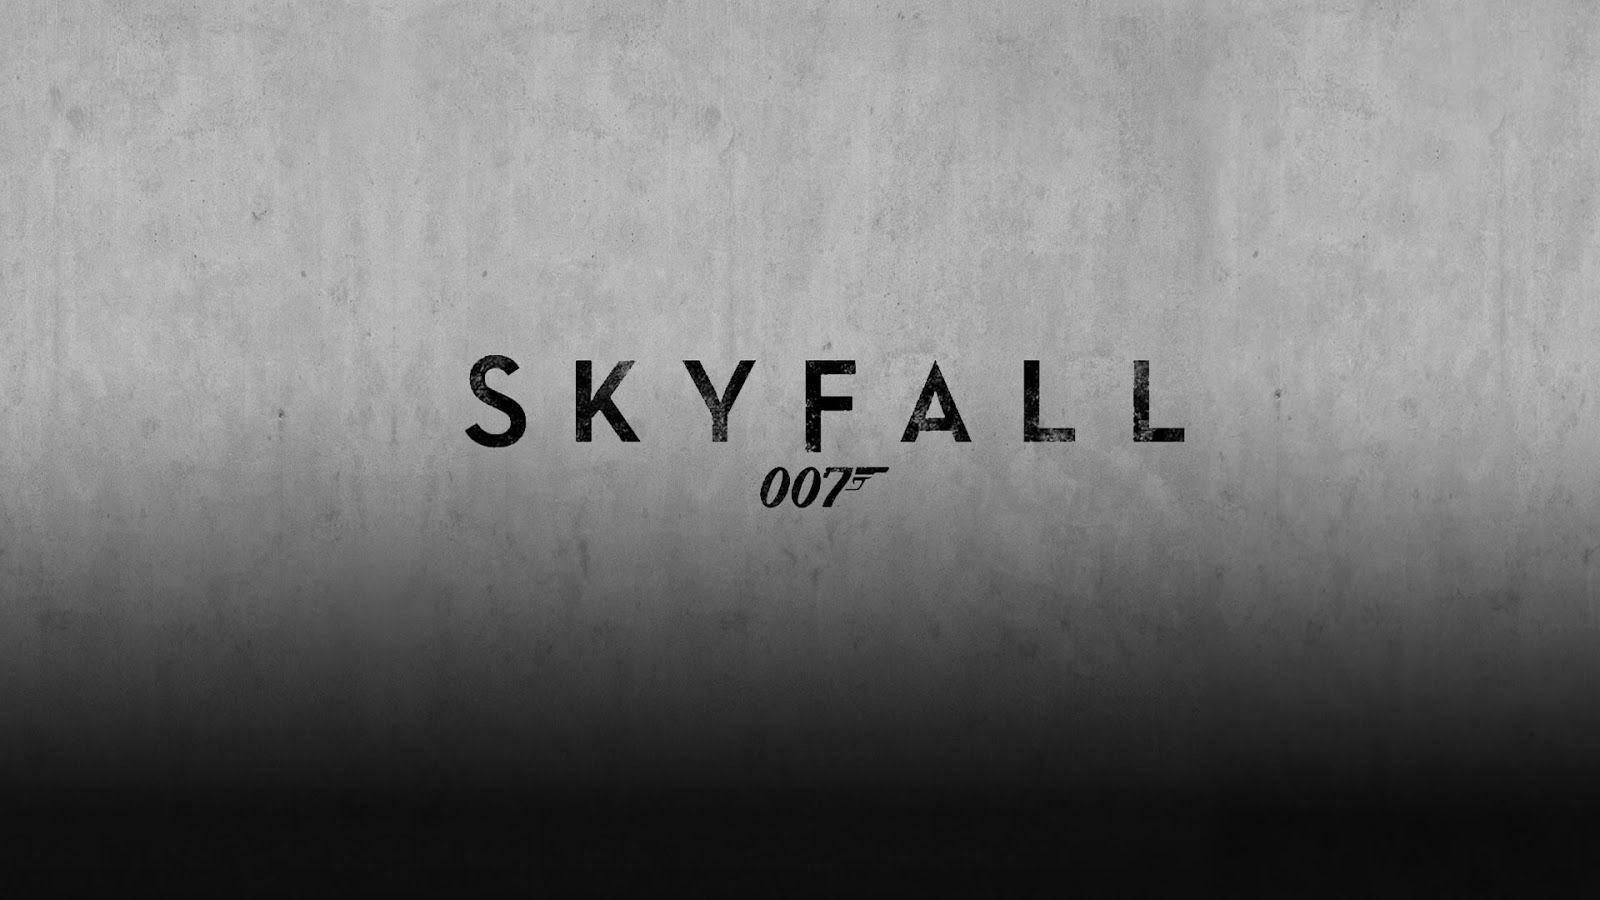 Skyfall Daniel Craig as James Bond  HD Wallpapers